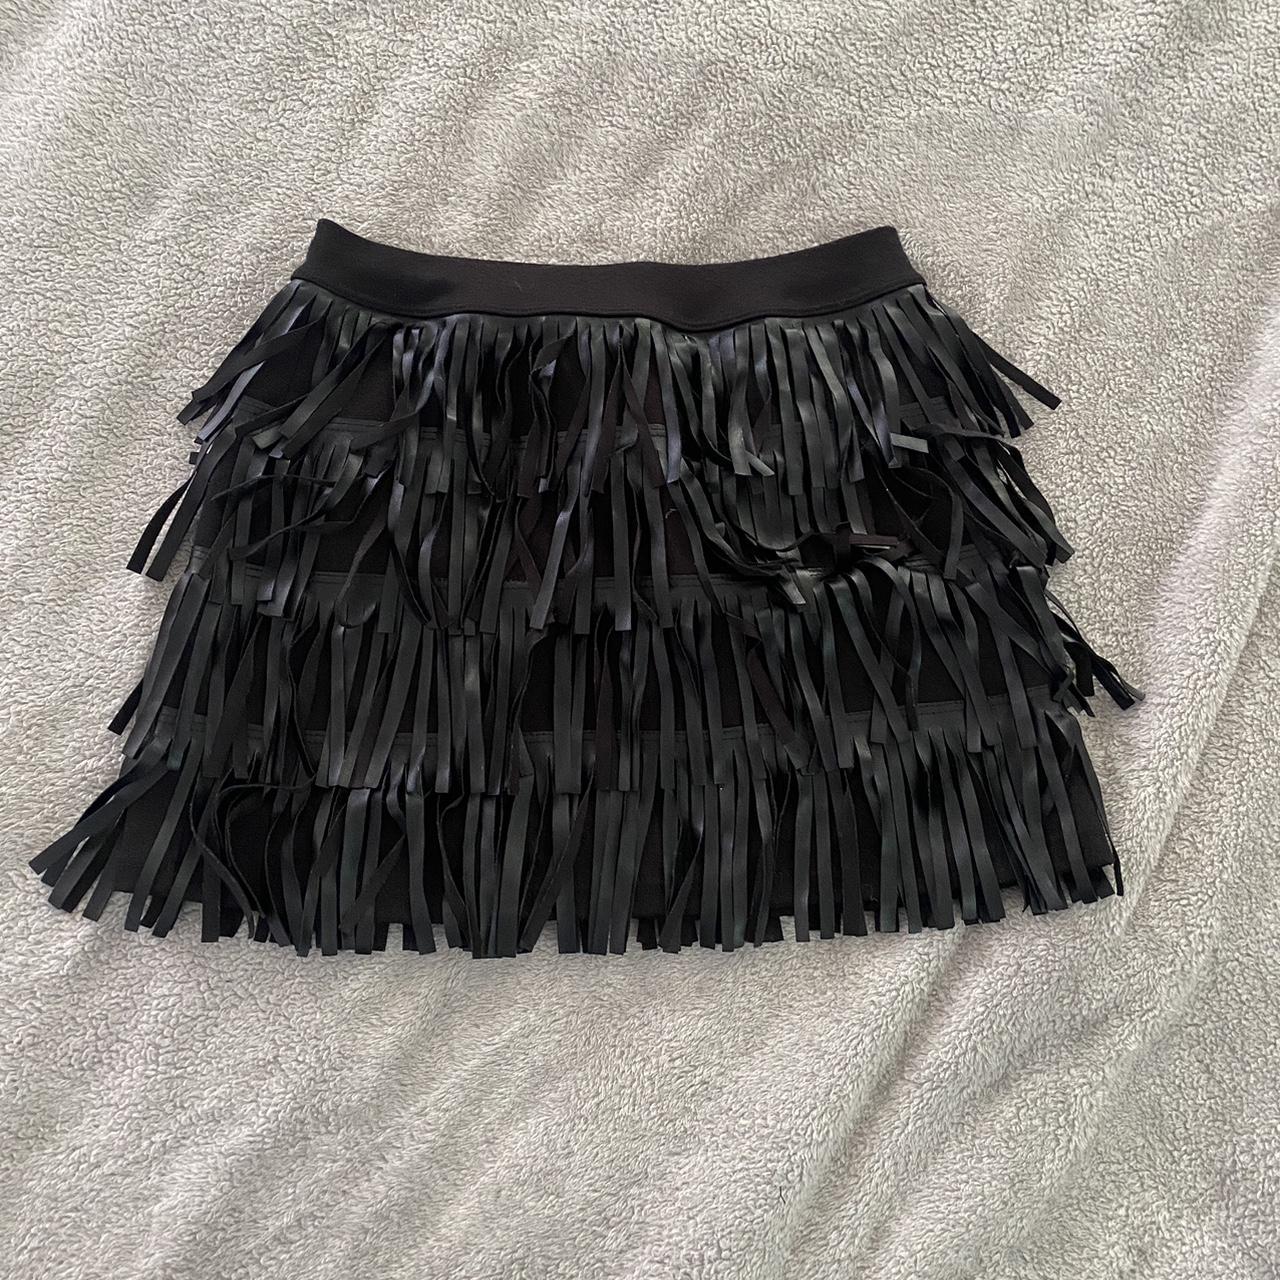 Fringe Black Leather Skirt •Size small women •Great... - Depop